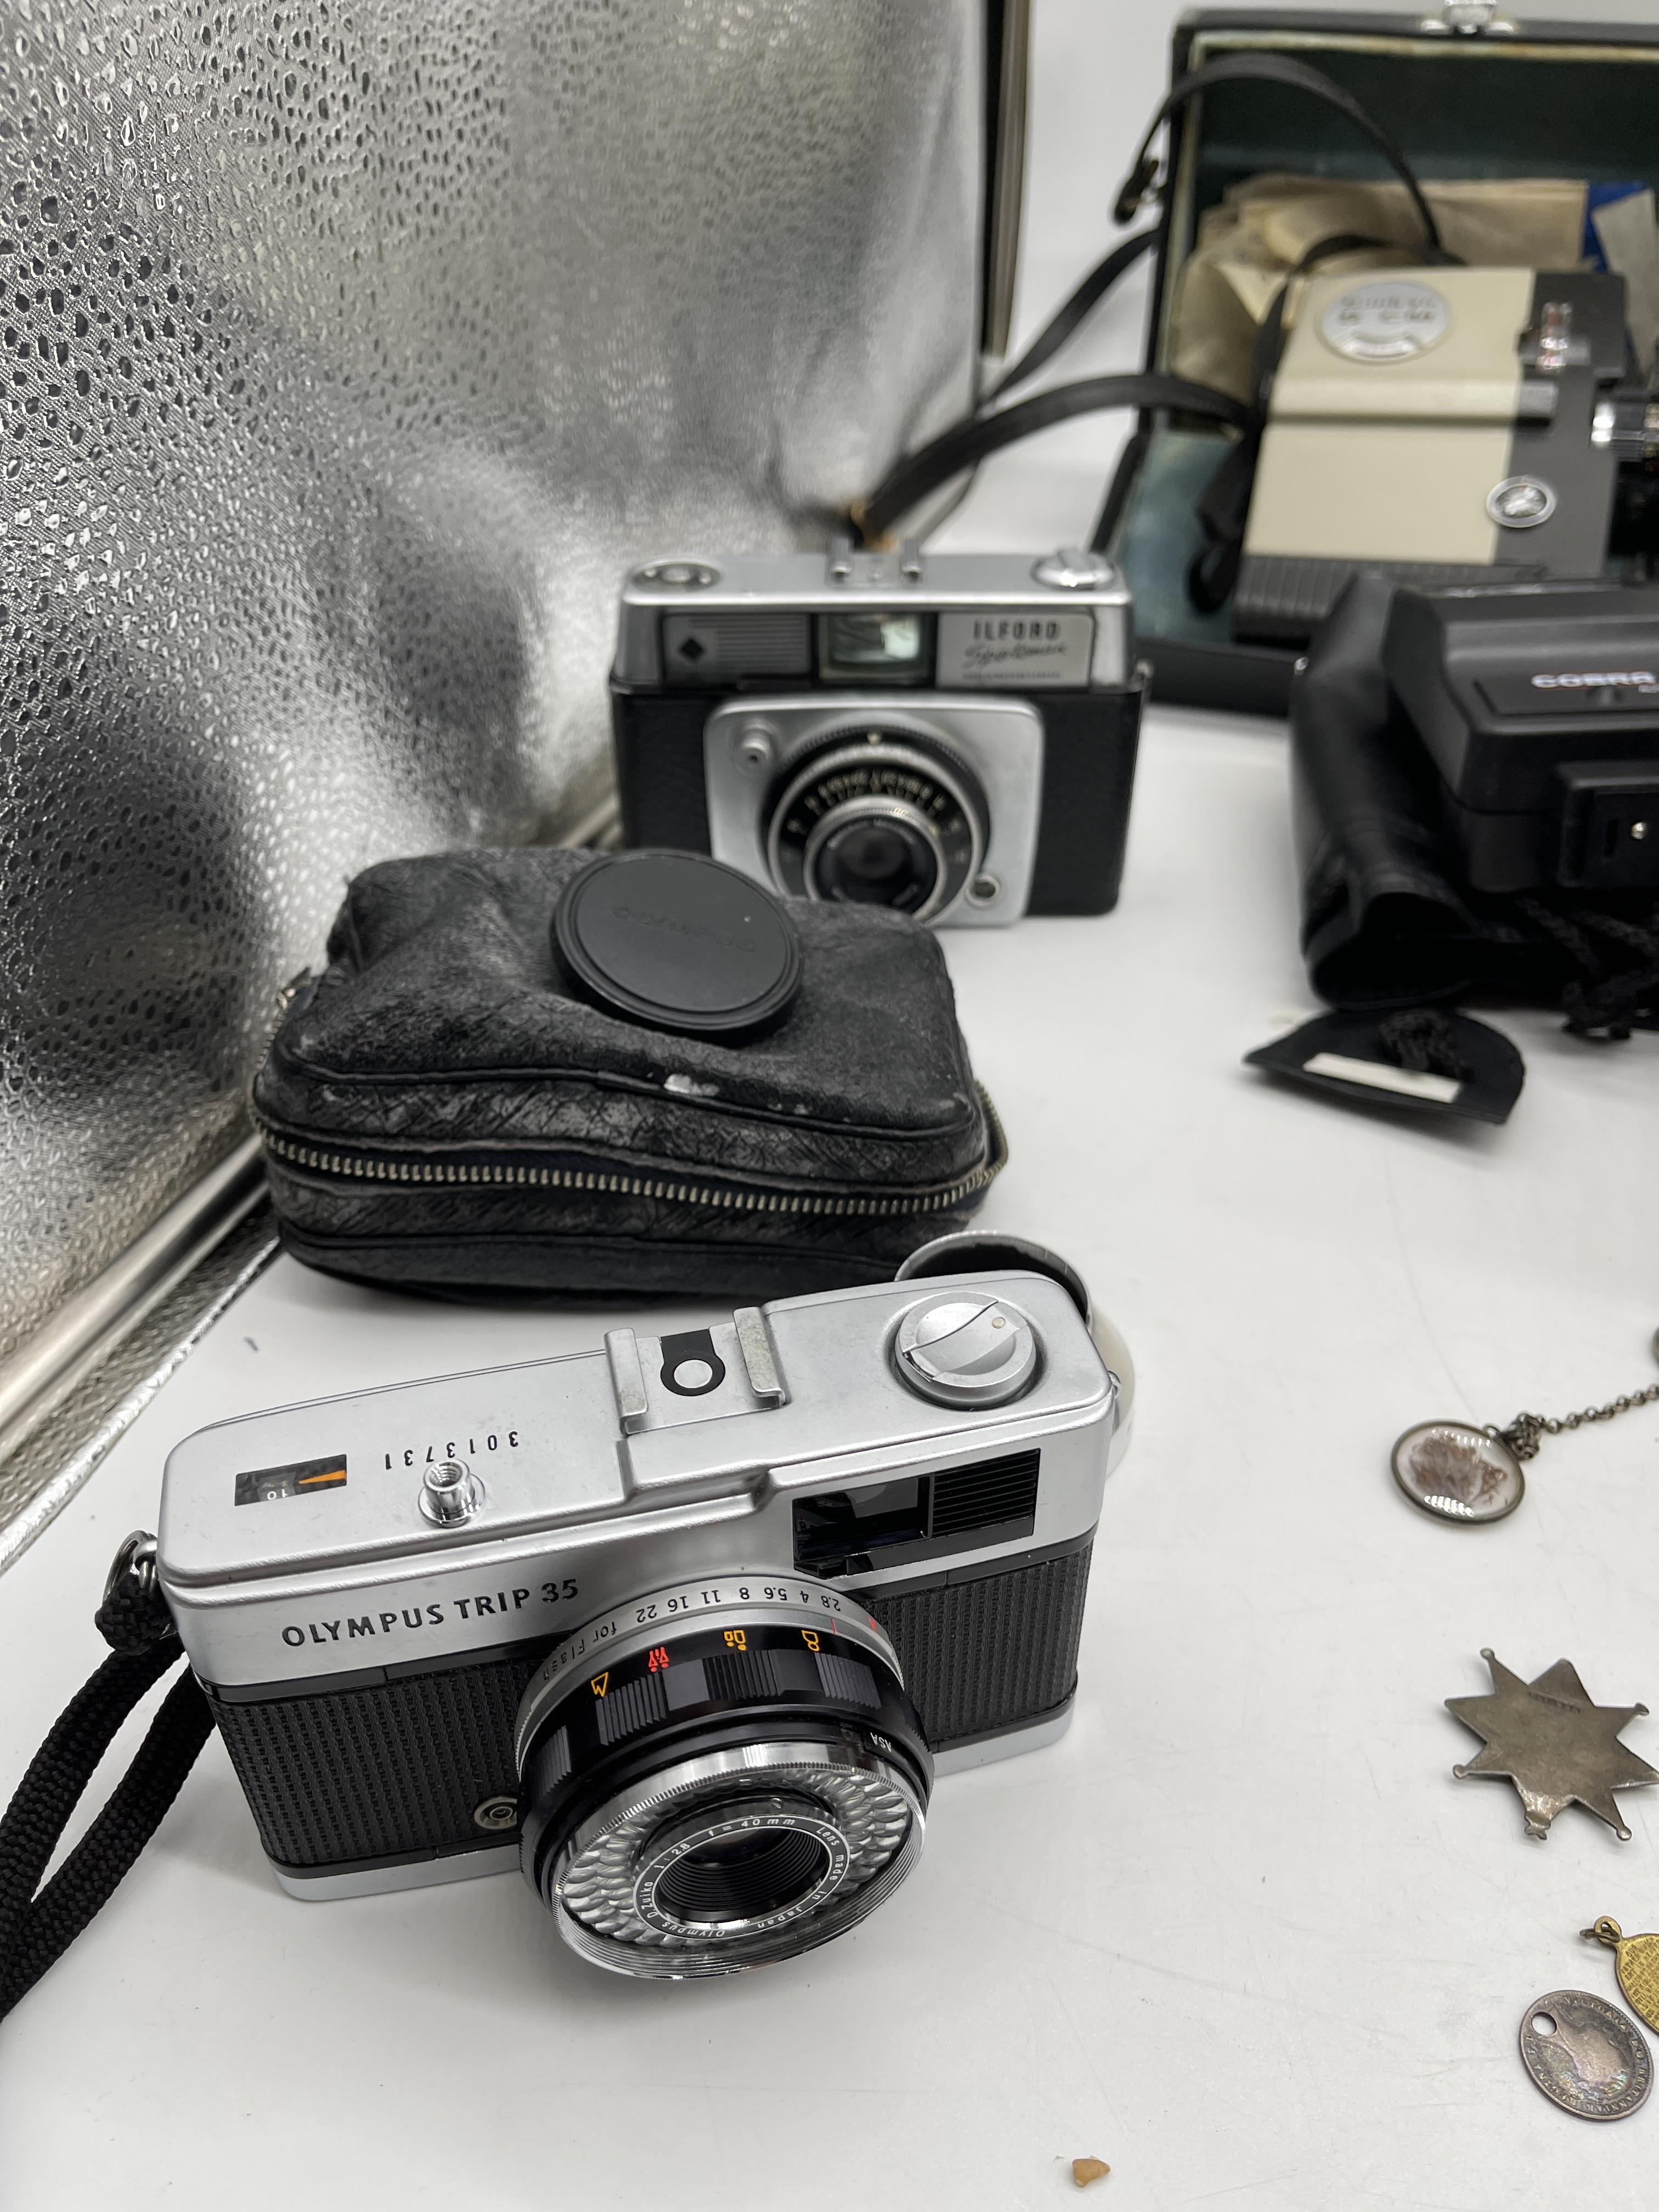 Collection of Vintage Cameras, Old Coins, Dress Je - Image 7 of 24